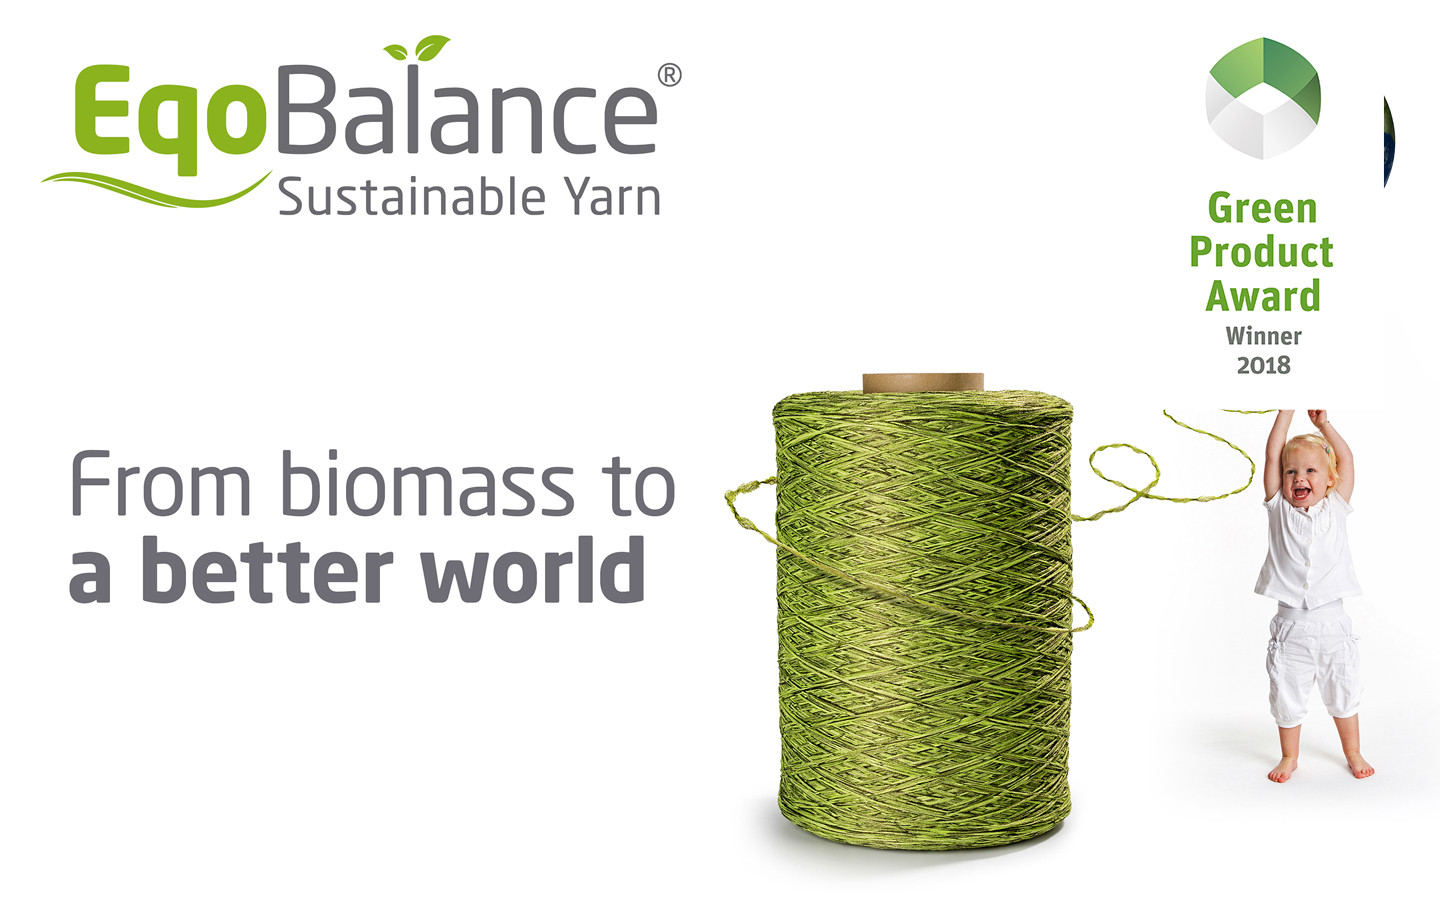 EqoBalance® biomass balance yarns